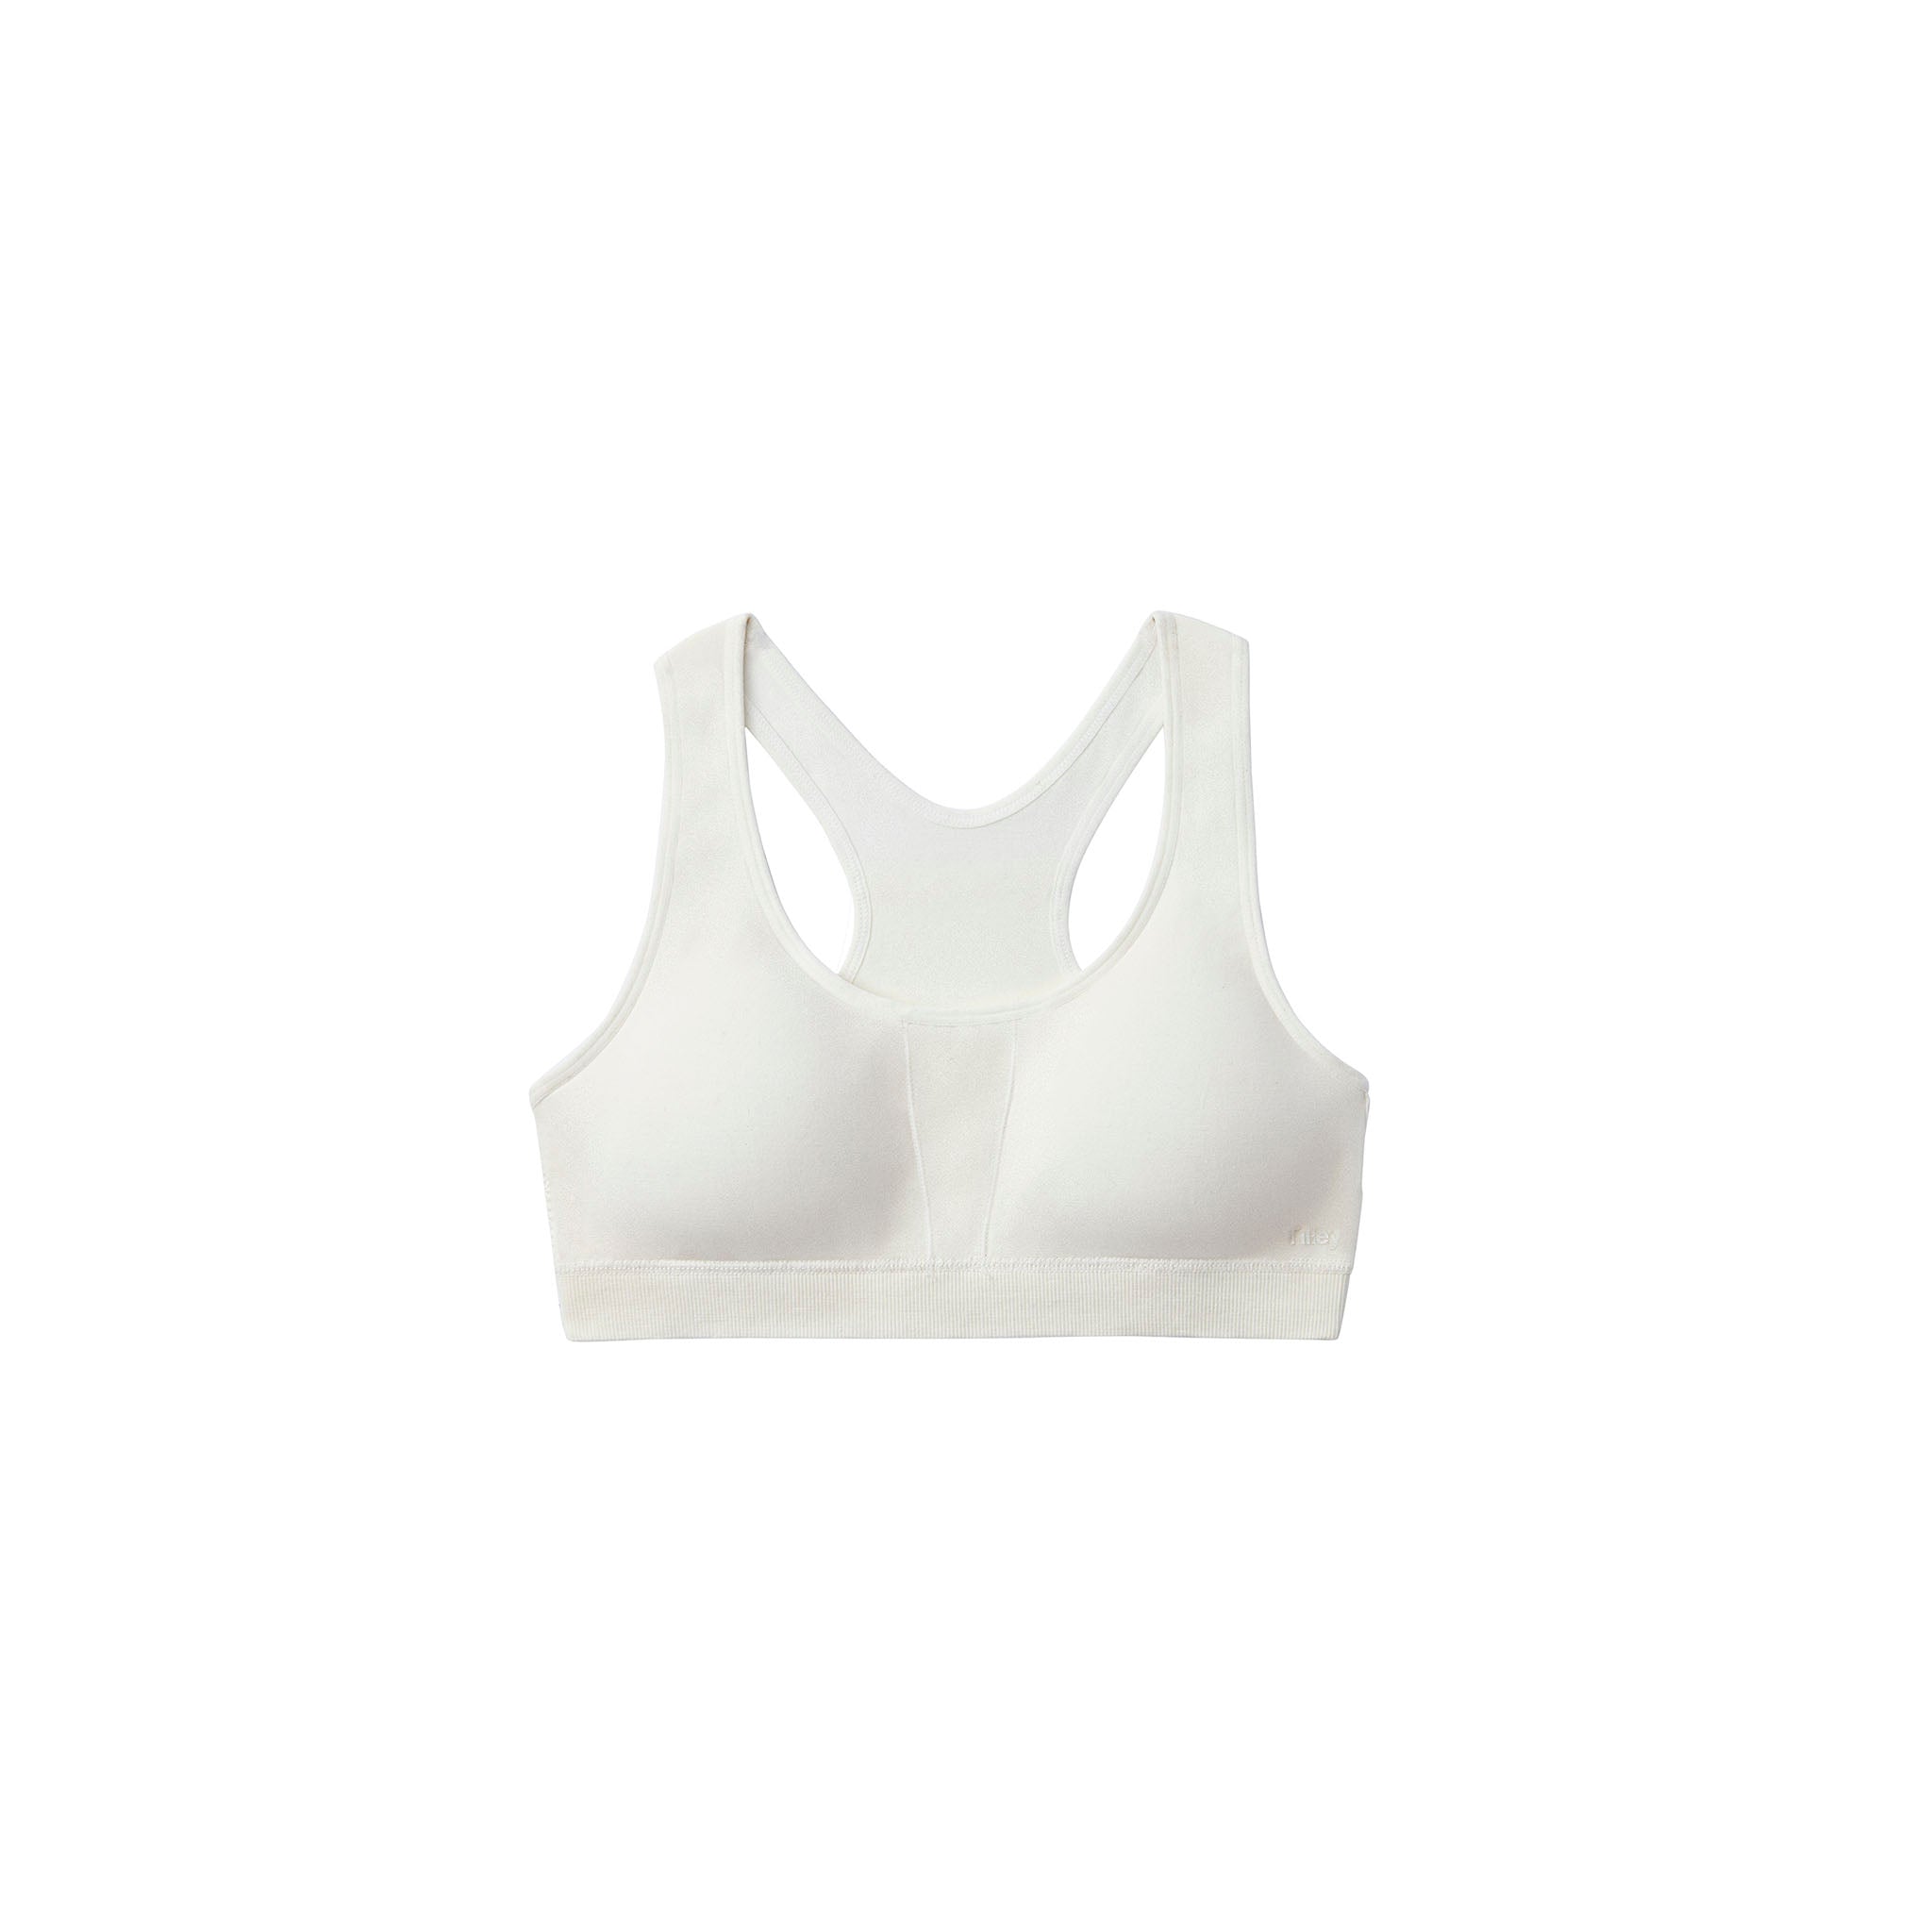 Pjtewawe travel equipment women's disposable bras disposable spa top  underwear brassieres tops 